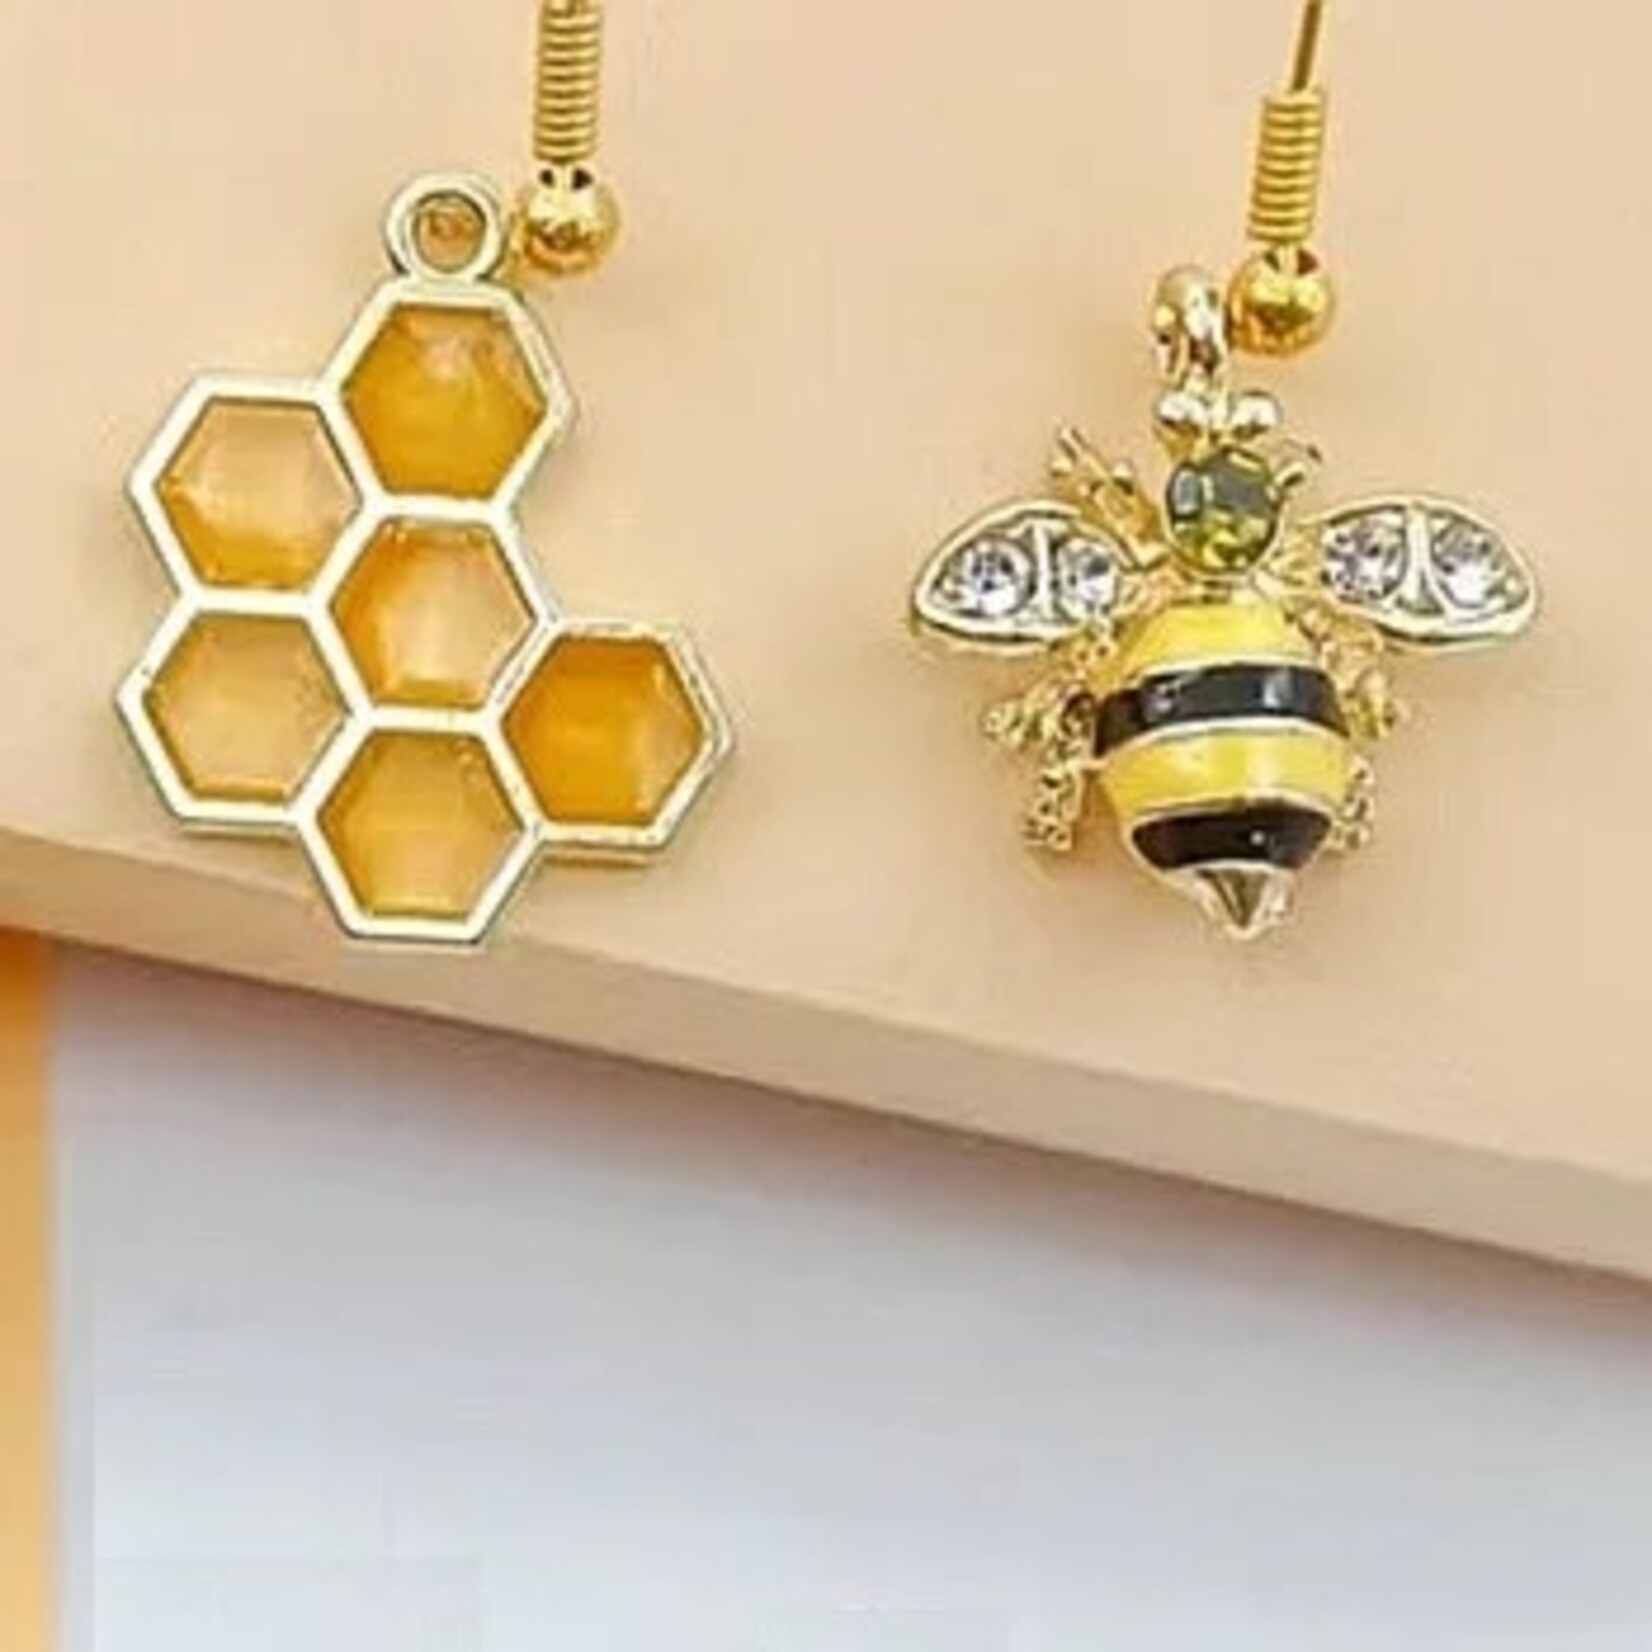 Honeybee 19x18mm Gold Plated Enamel Charm